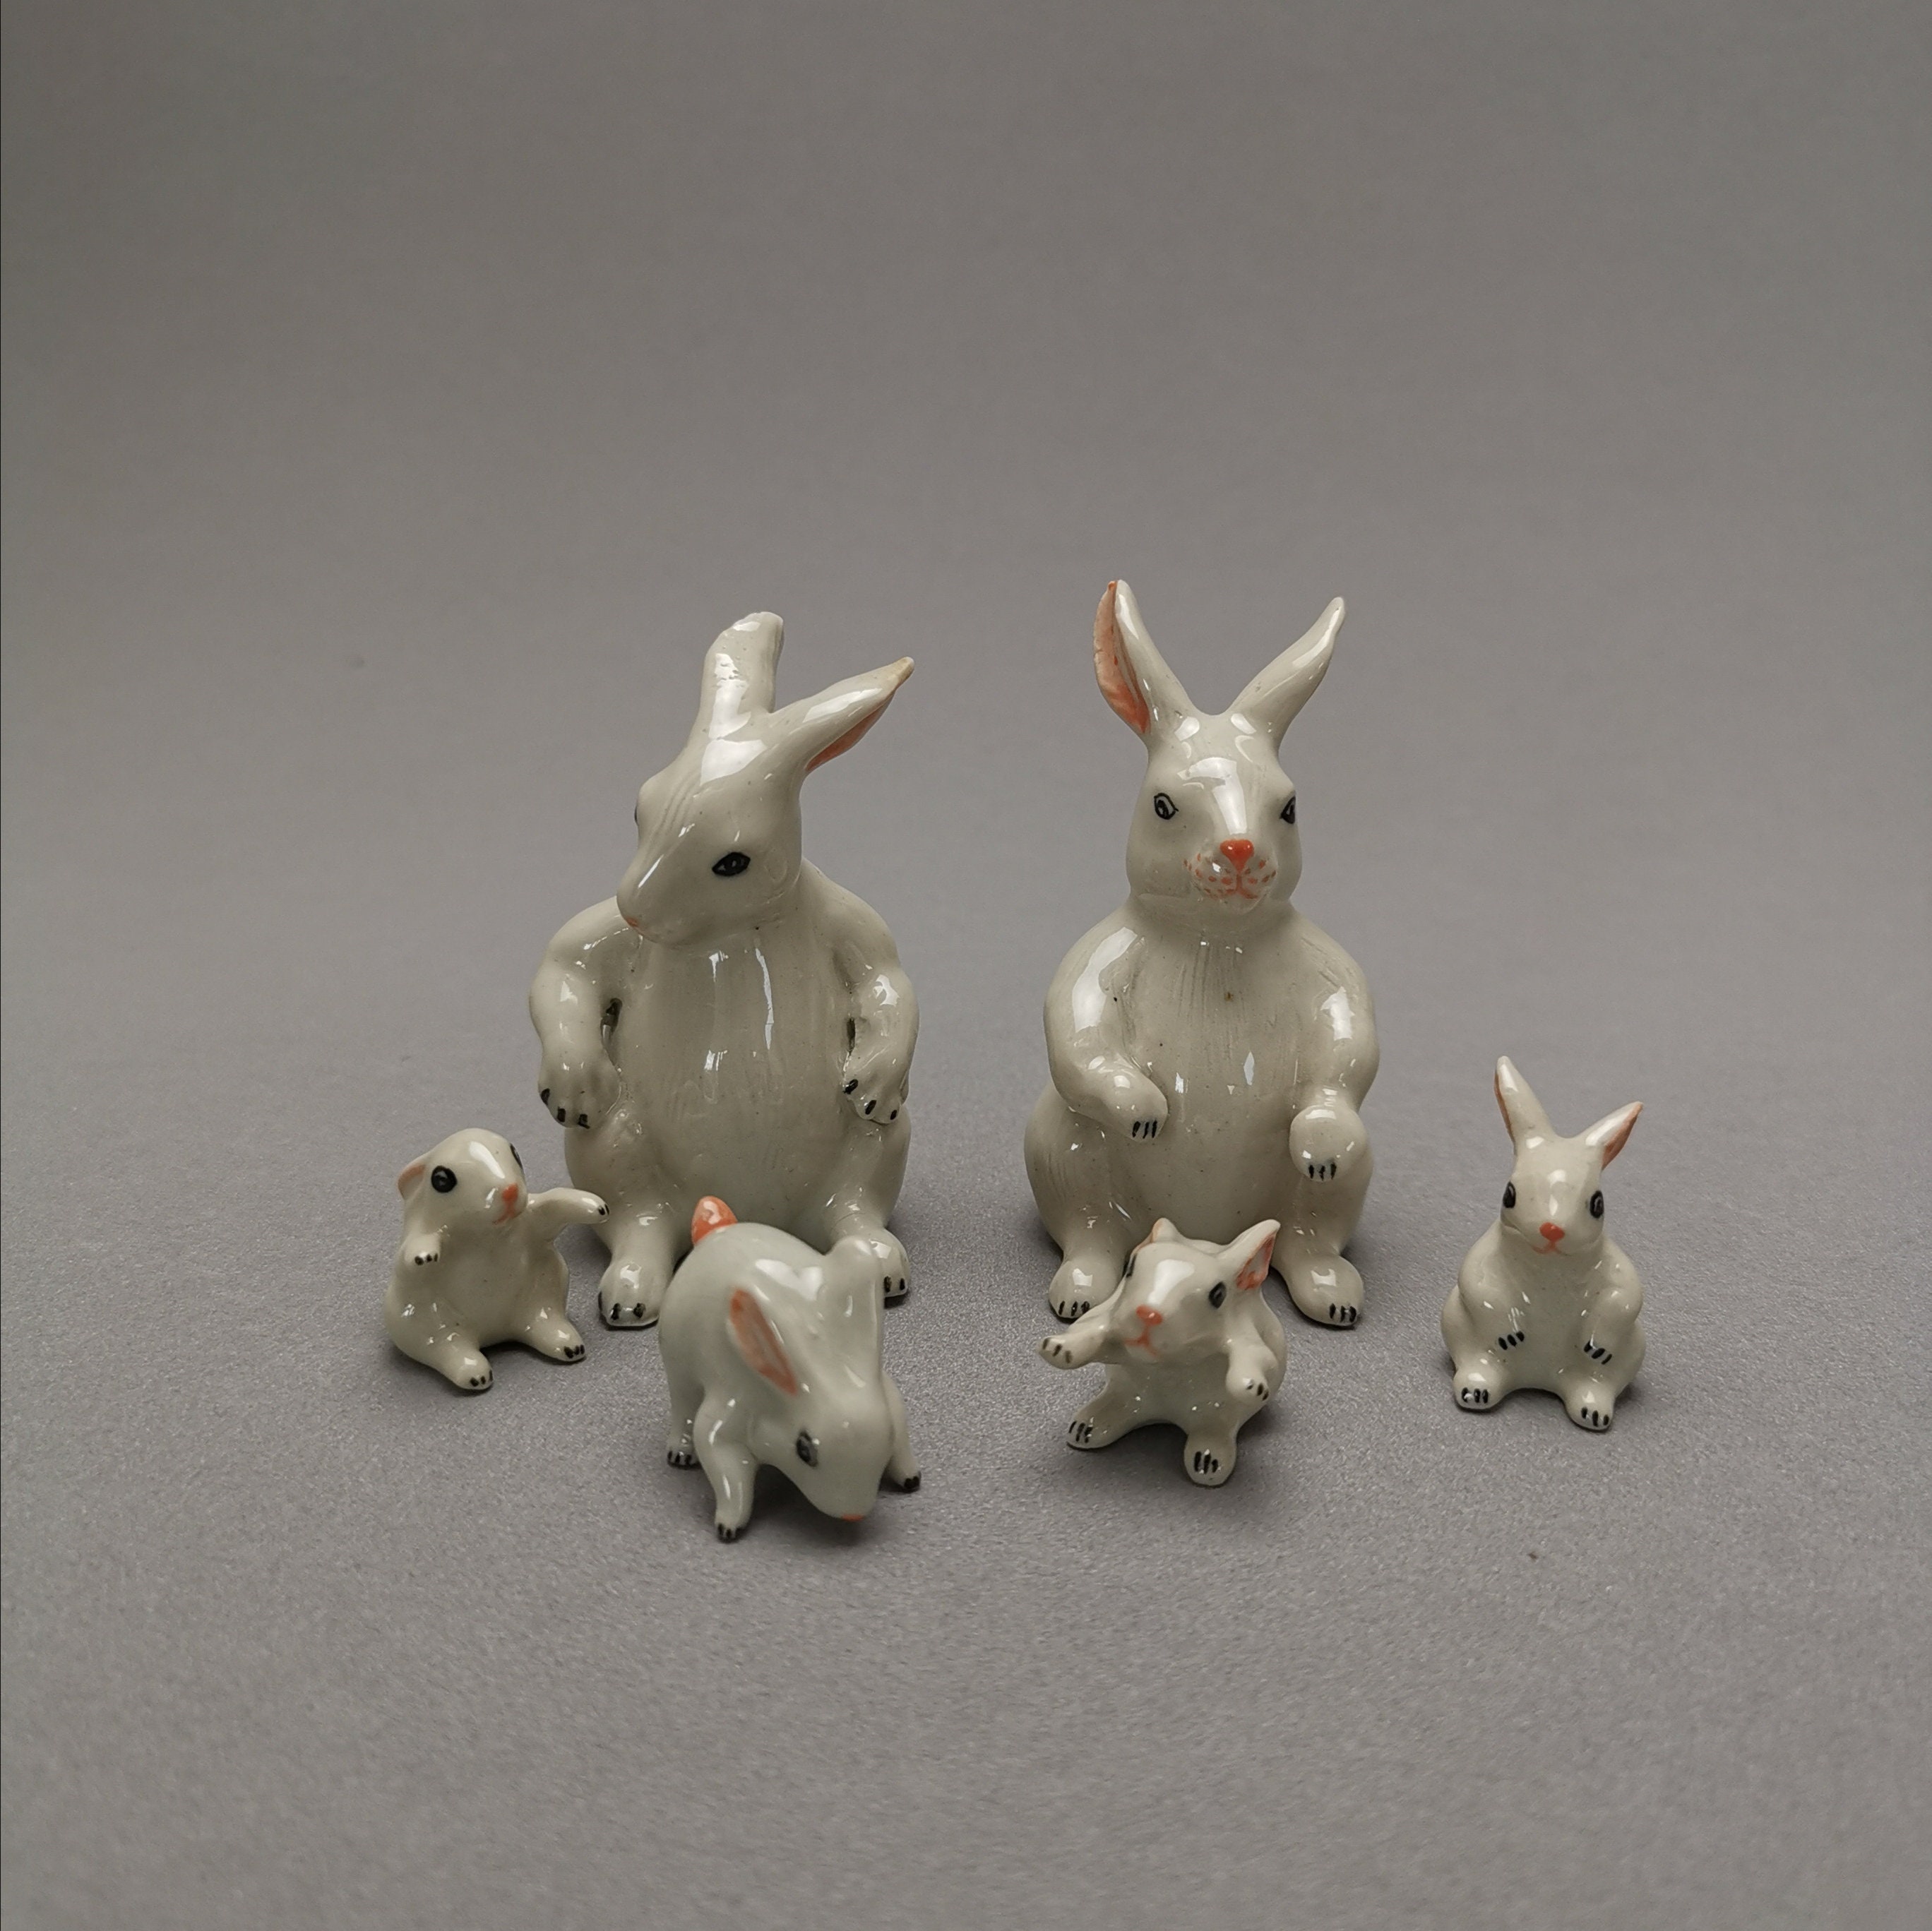 White Rabbit Bunny Figurine Miniature Ceramic Cute Handmade Fairly Garden Decor 